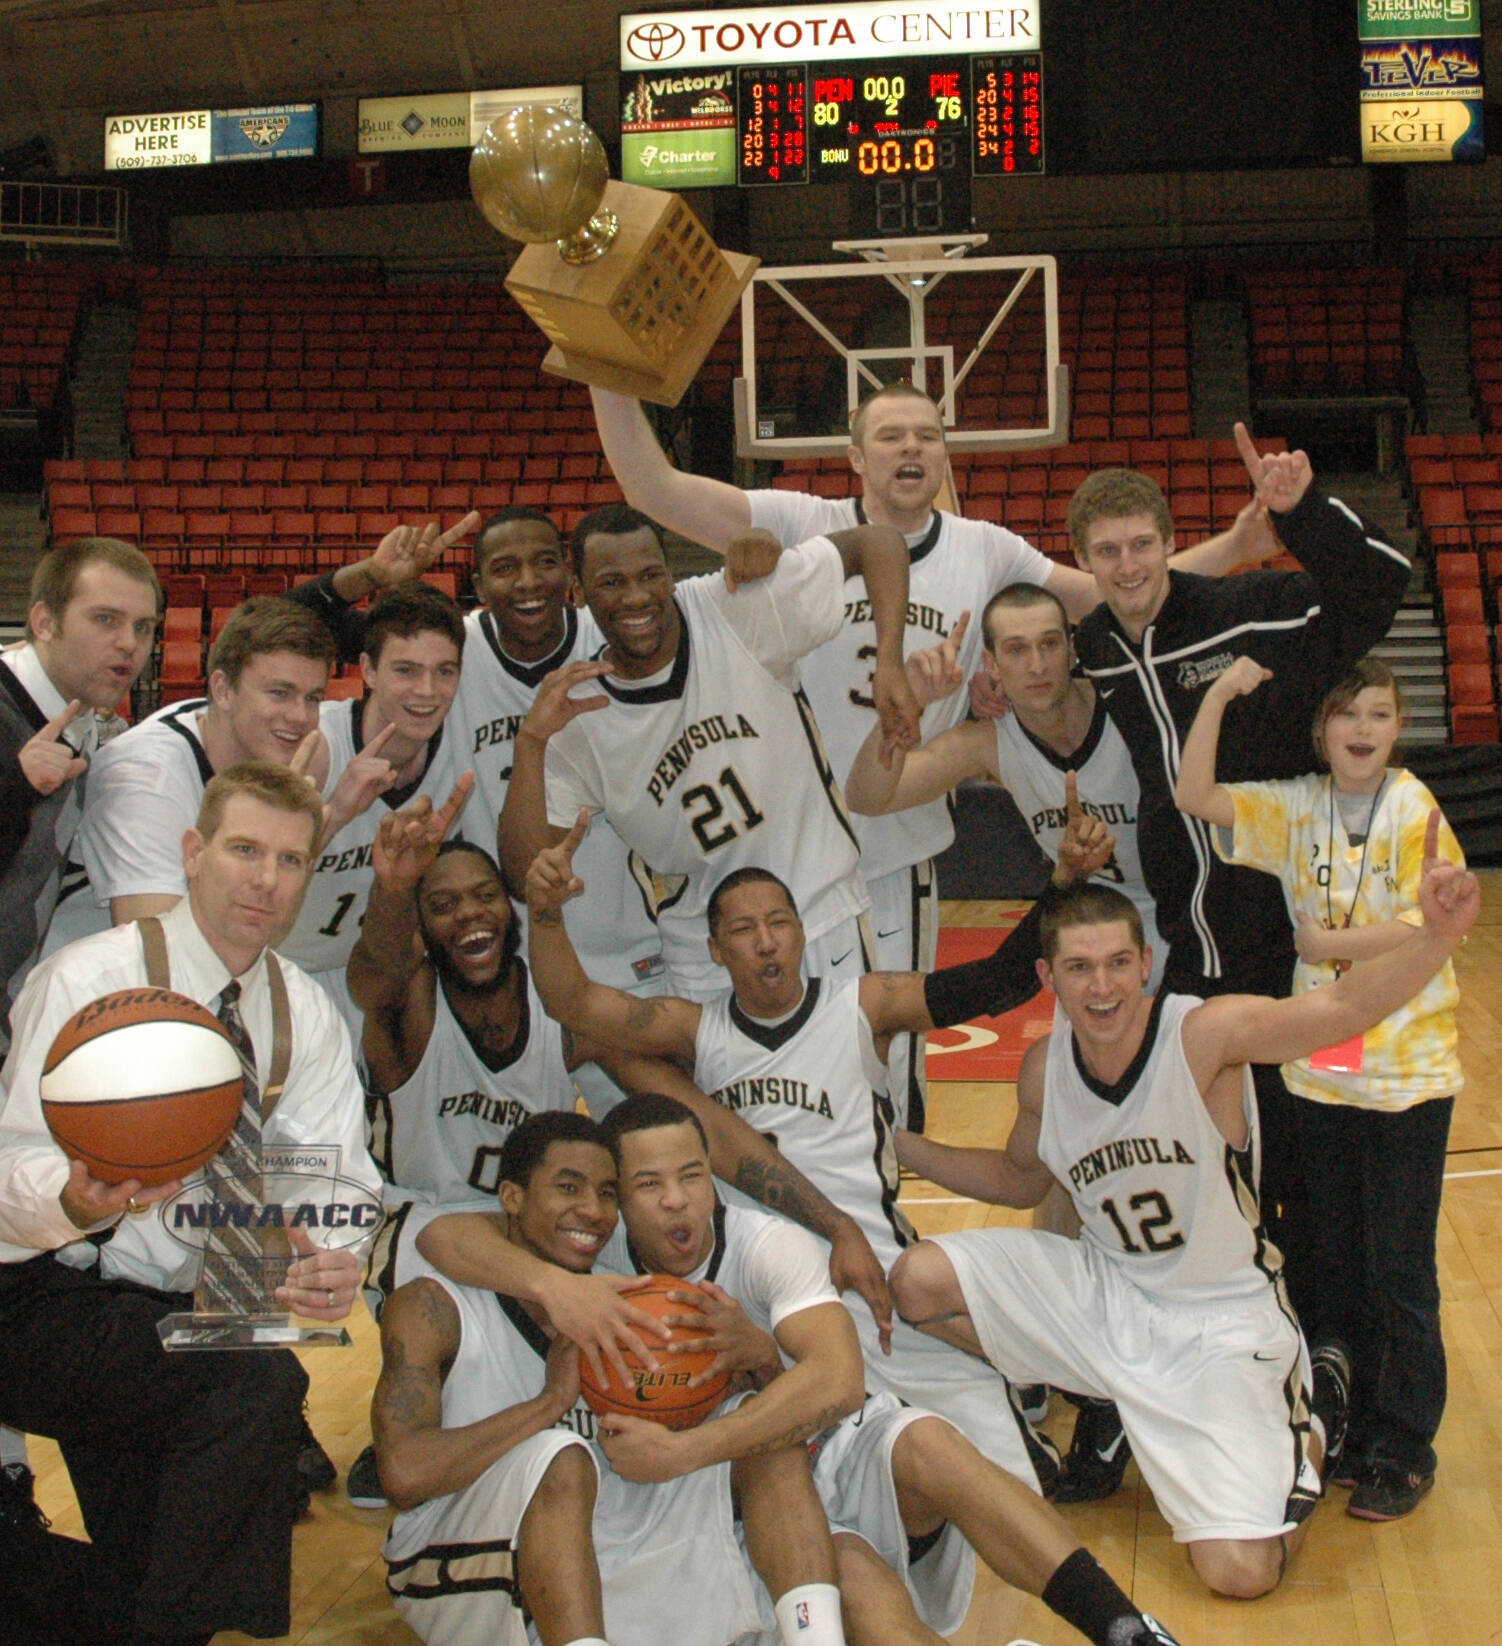 Peninsula College Athletics
Peninsula College’s 2010-11 men’s basketball team celebrates an NWAC championship.